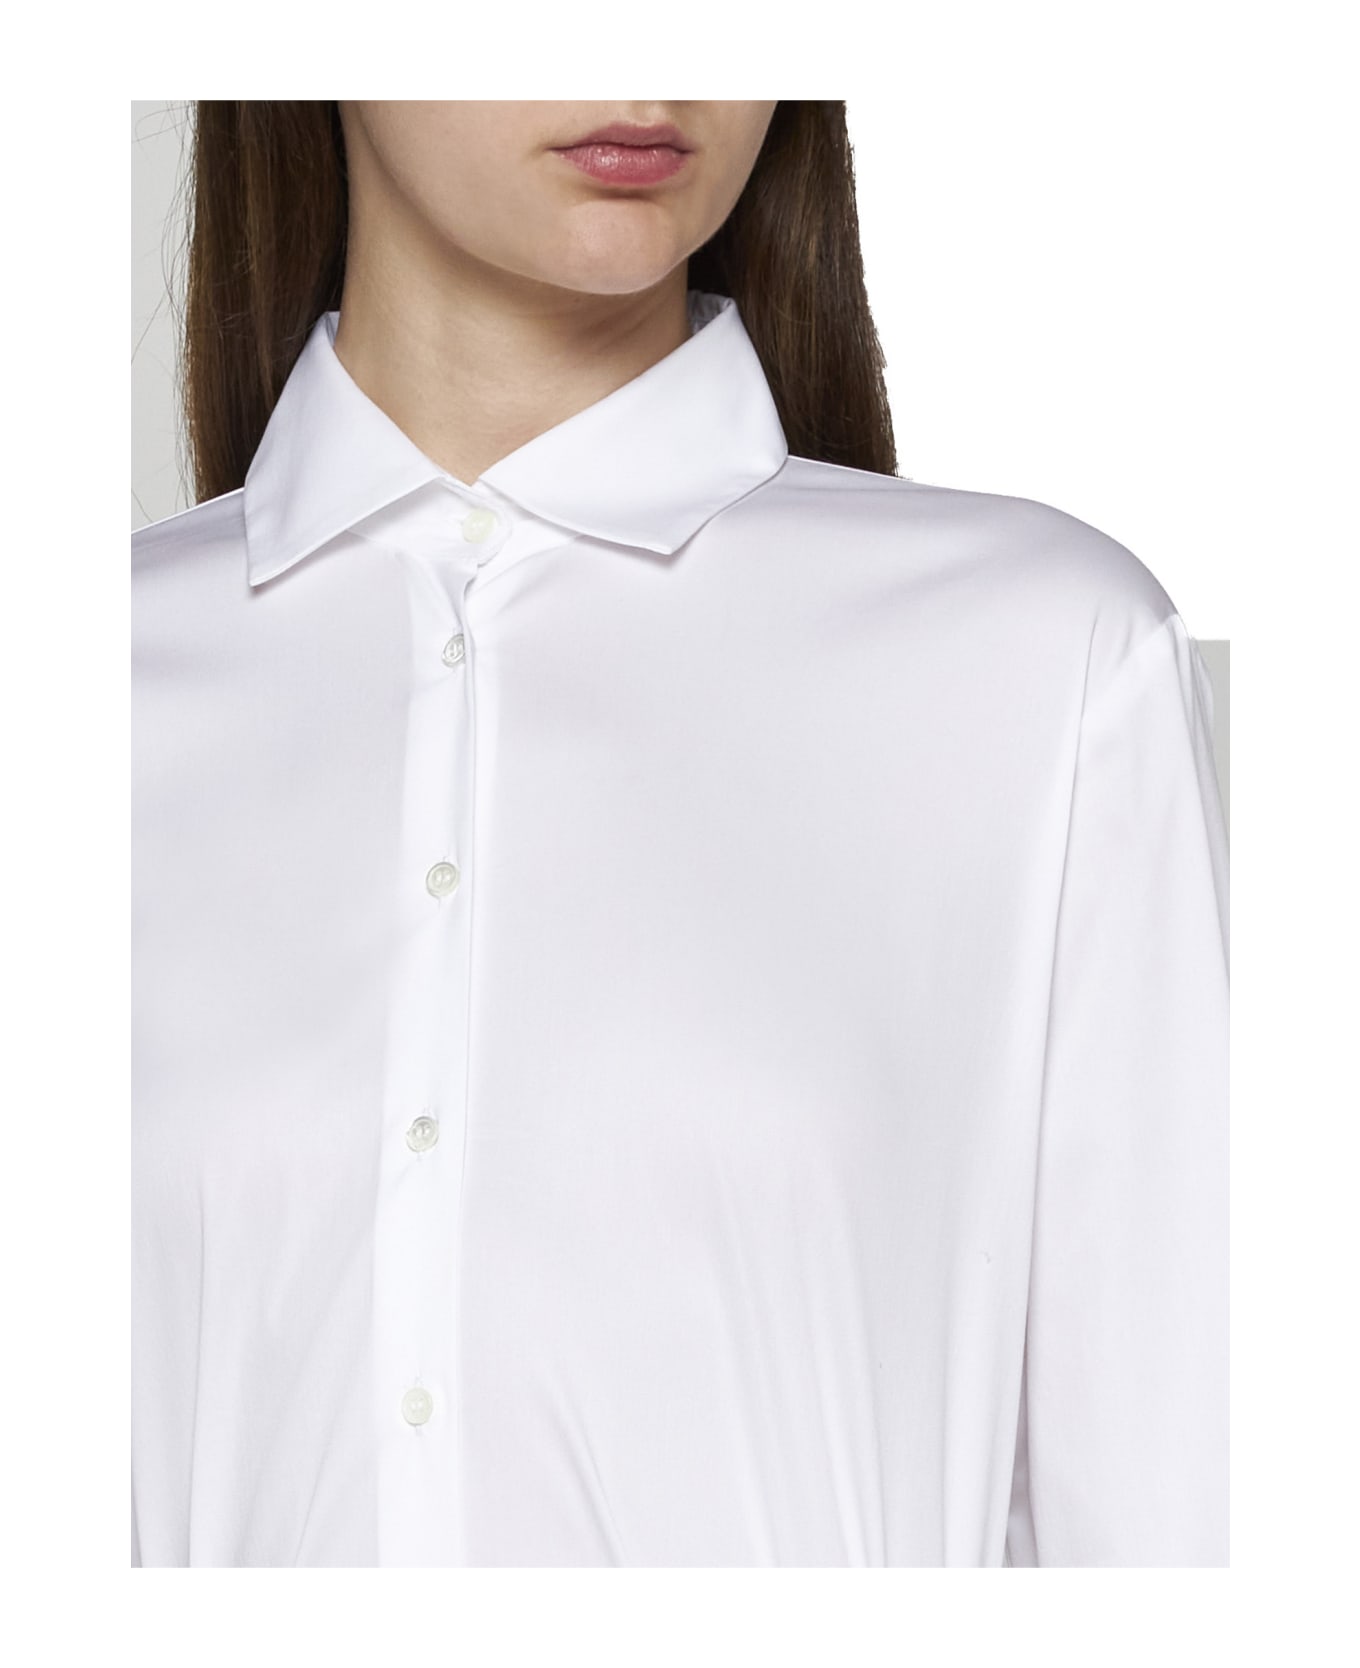 Blanca Vita Shirt - Diamante シャツ